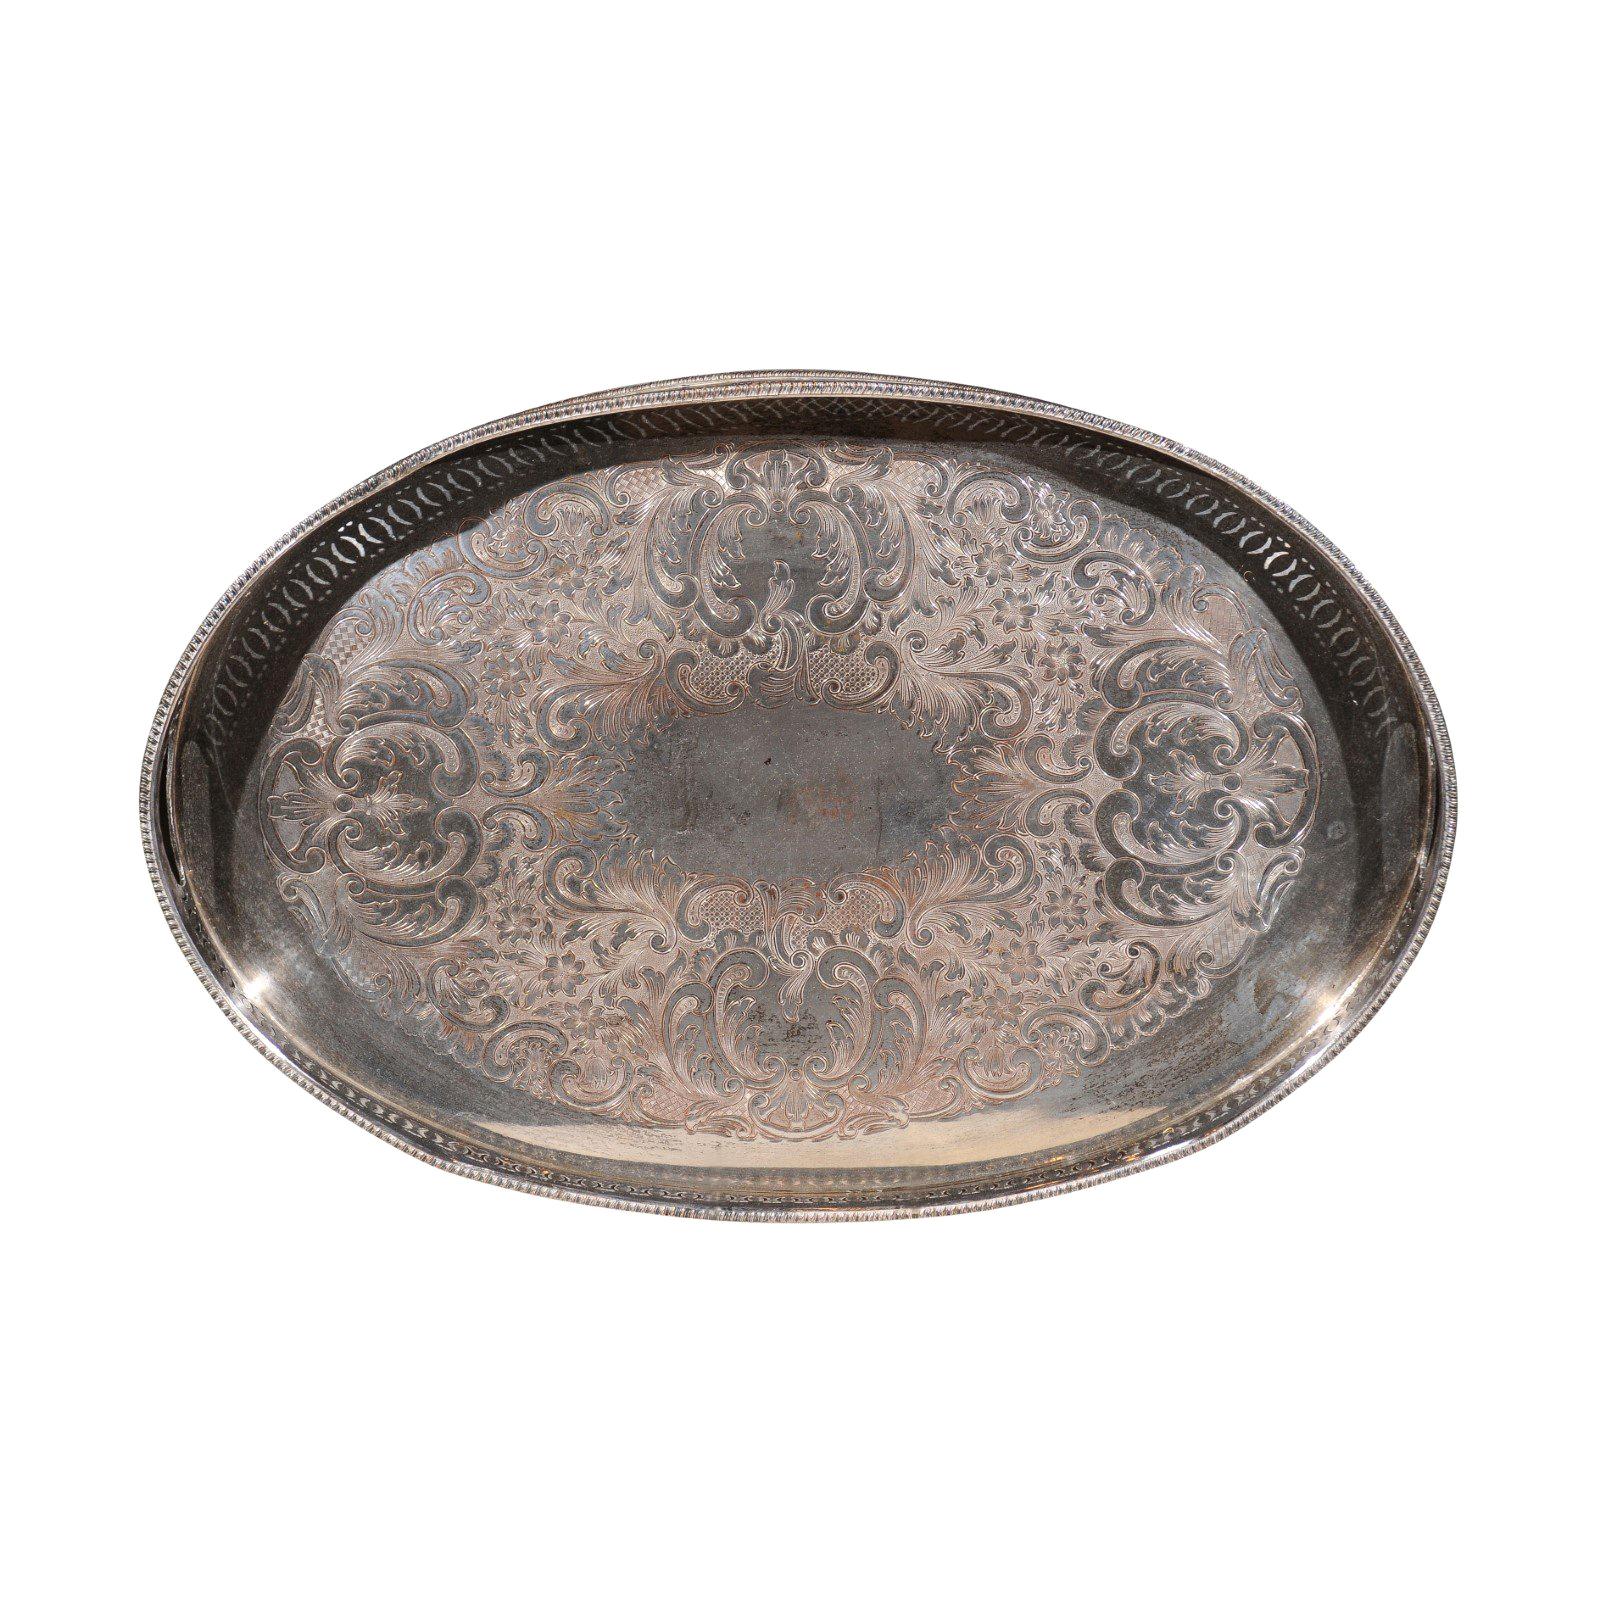 English Edwardian Period Silver Plated Tray with Pierced Motifs and C-Scrolls